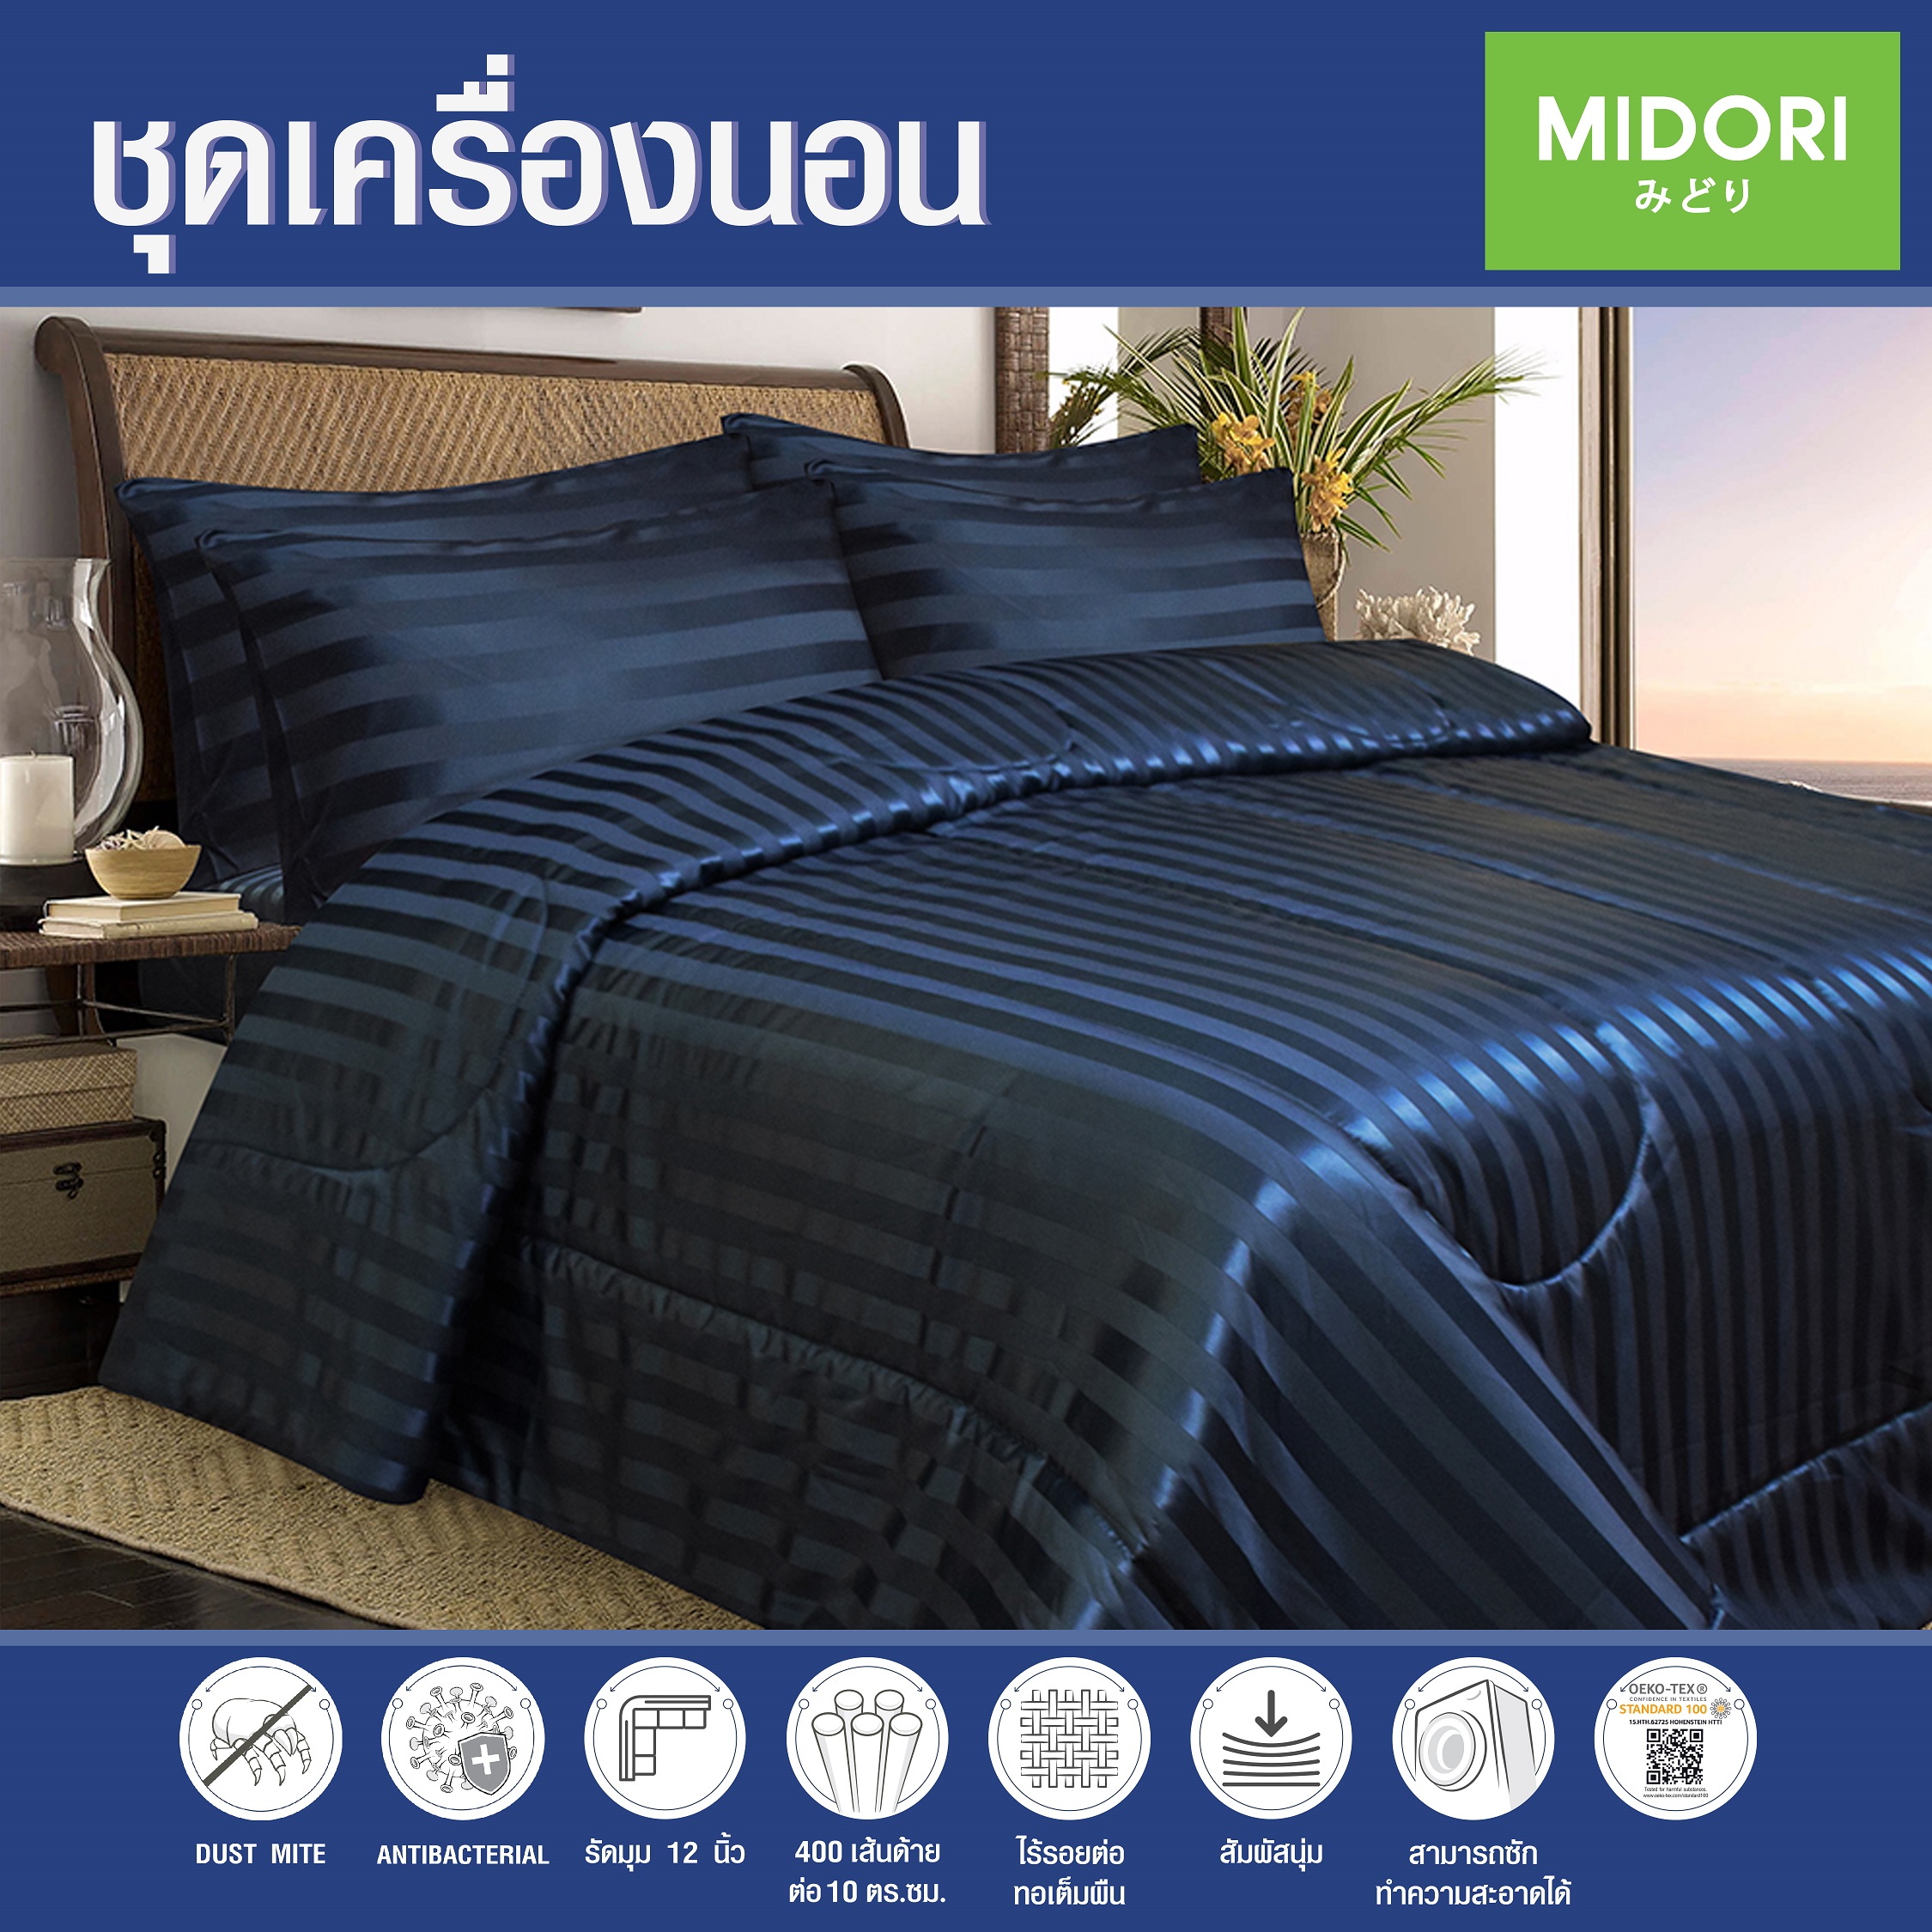 !!!NEW Midori Premium รุ่น Jacquard ผ้าปูที่นอน ชุดเครื่องนอน ชุดผ้าปู 6 ฟุต 5 ฟุต 3.5 ฟุต ลาย Navy Stripes